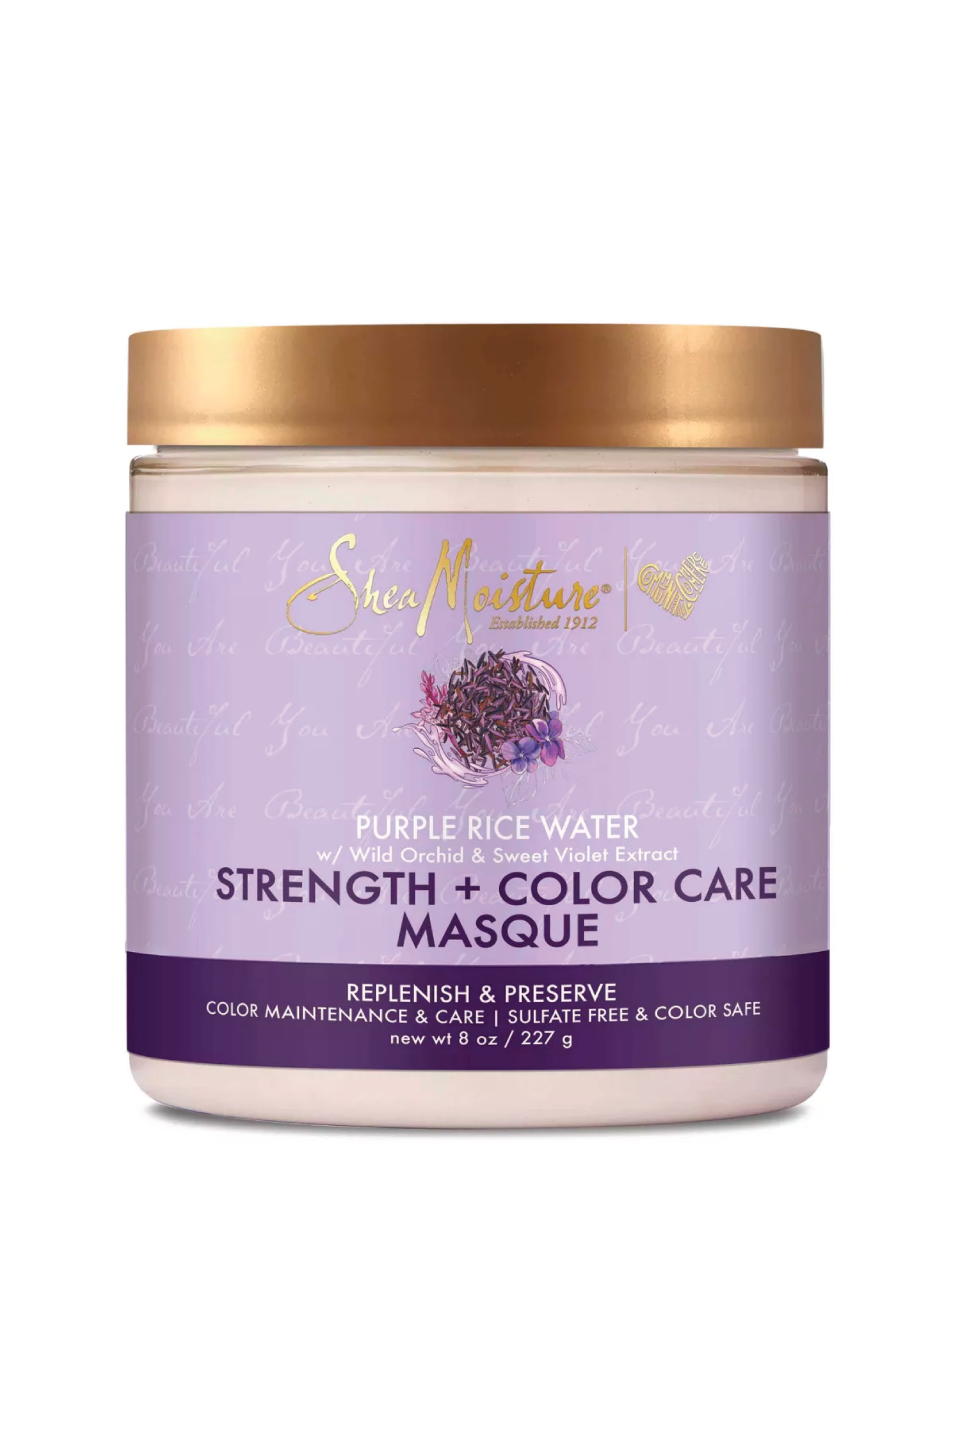 17) SheaMoisture Strength + Color Care Treatment Masque